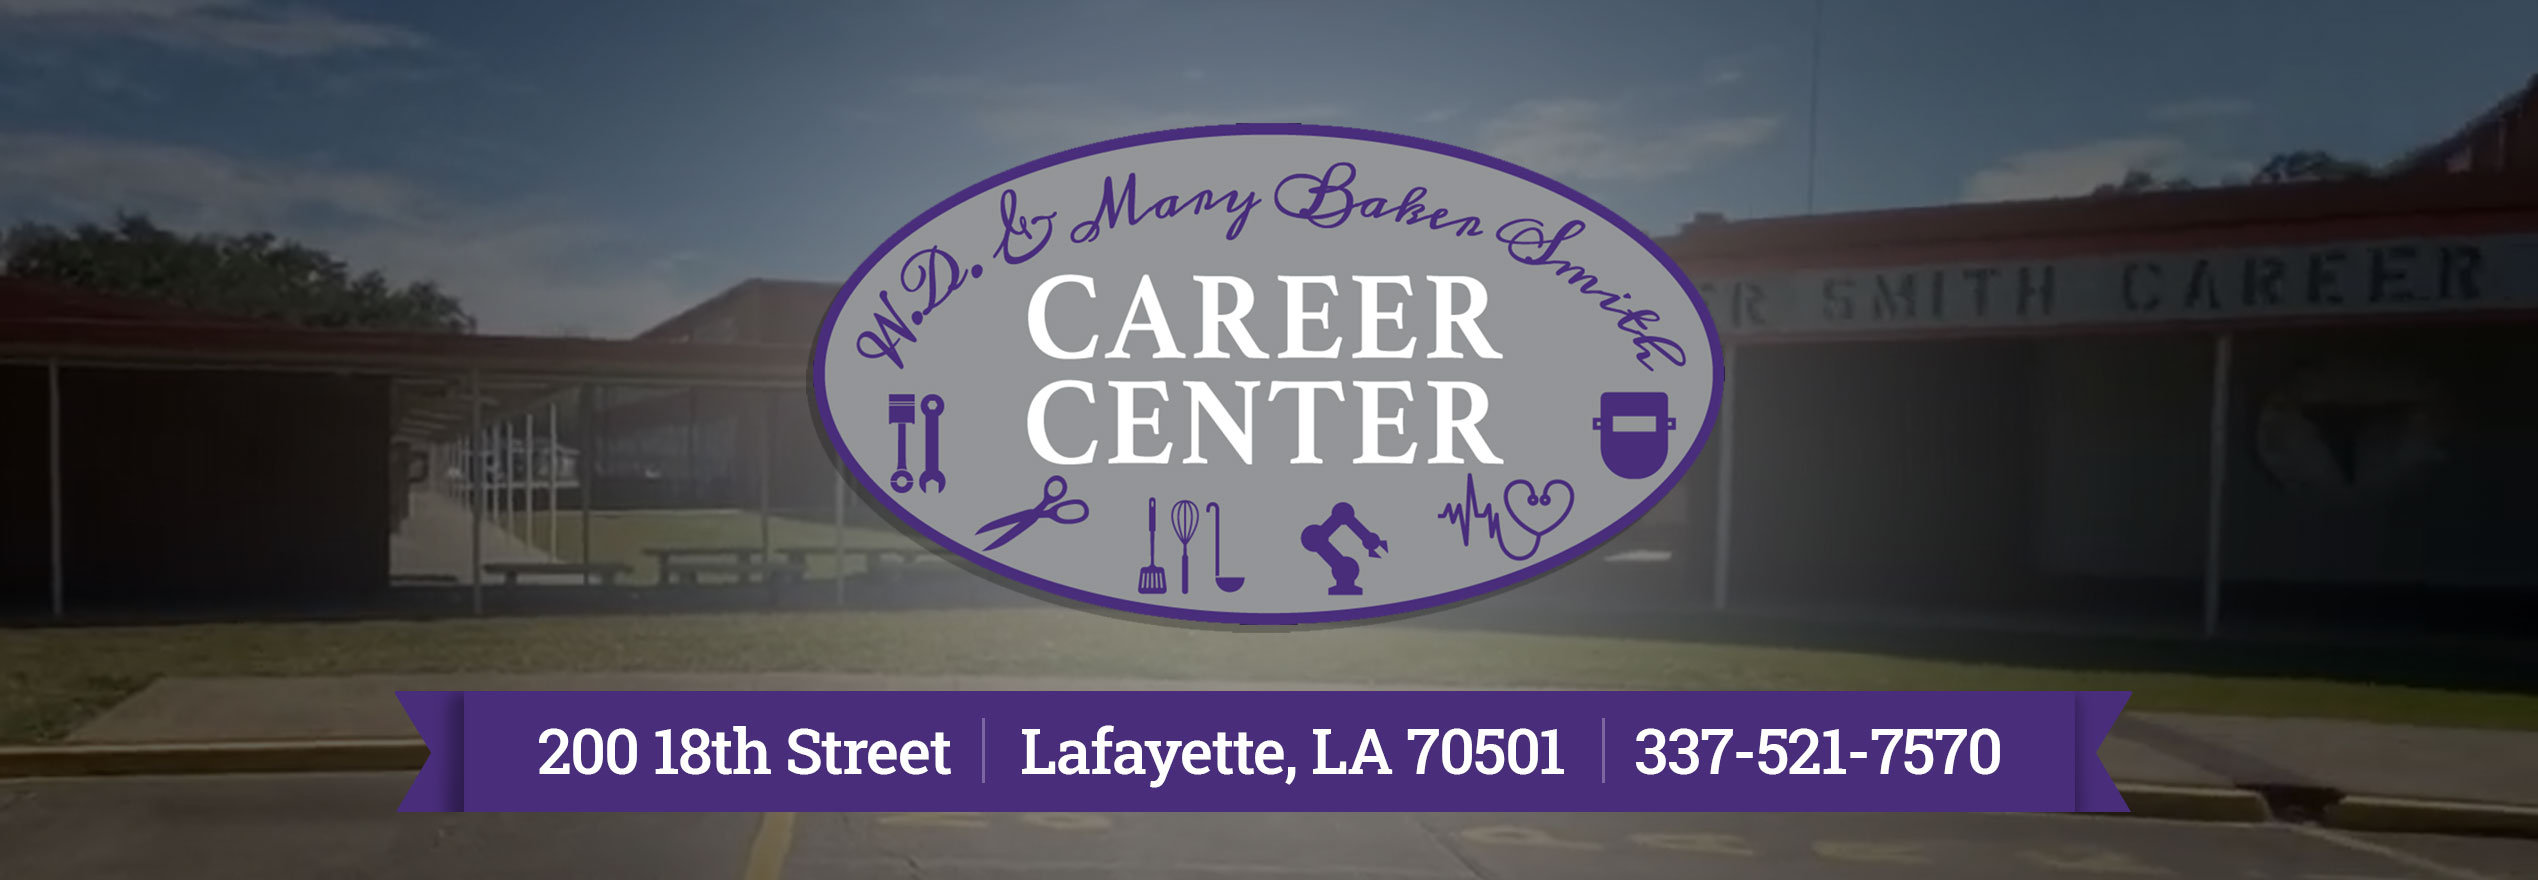 WD Smith & Mary Baker Smith Career Center